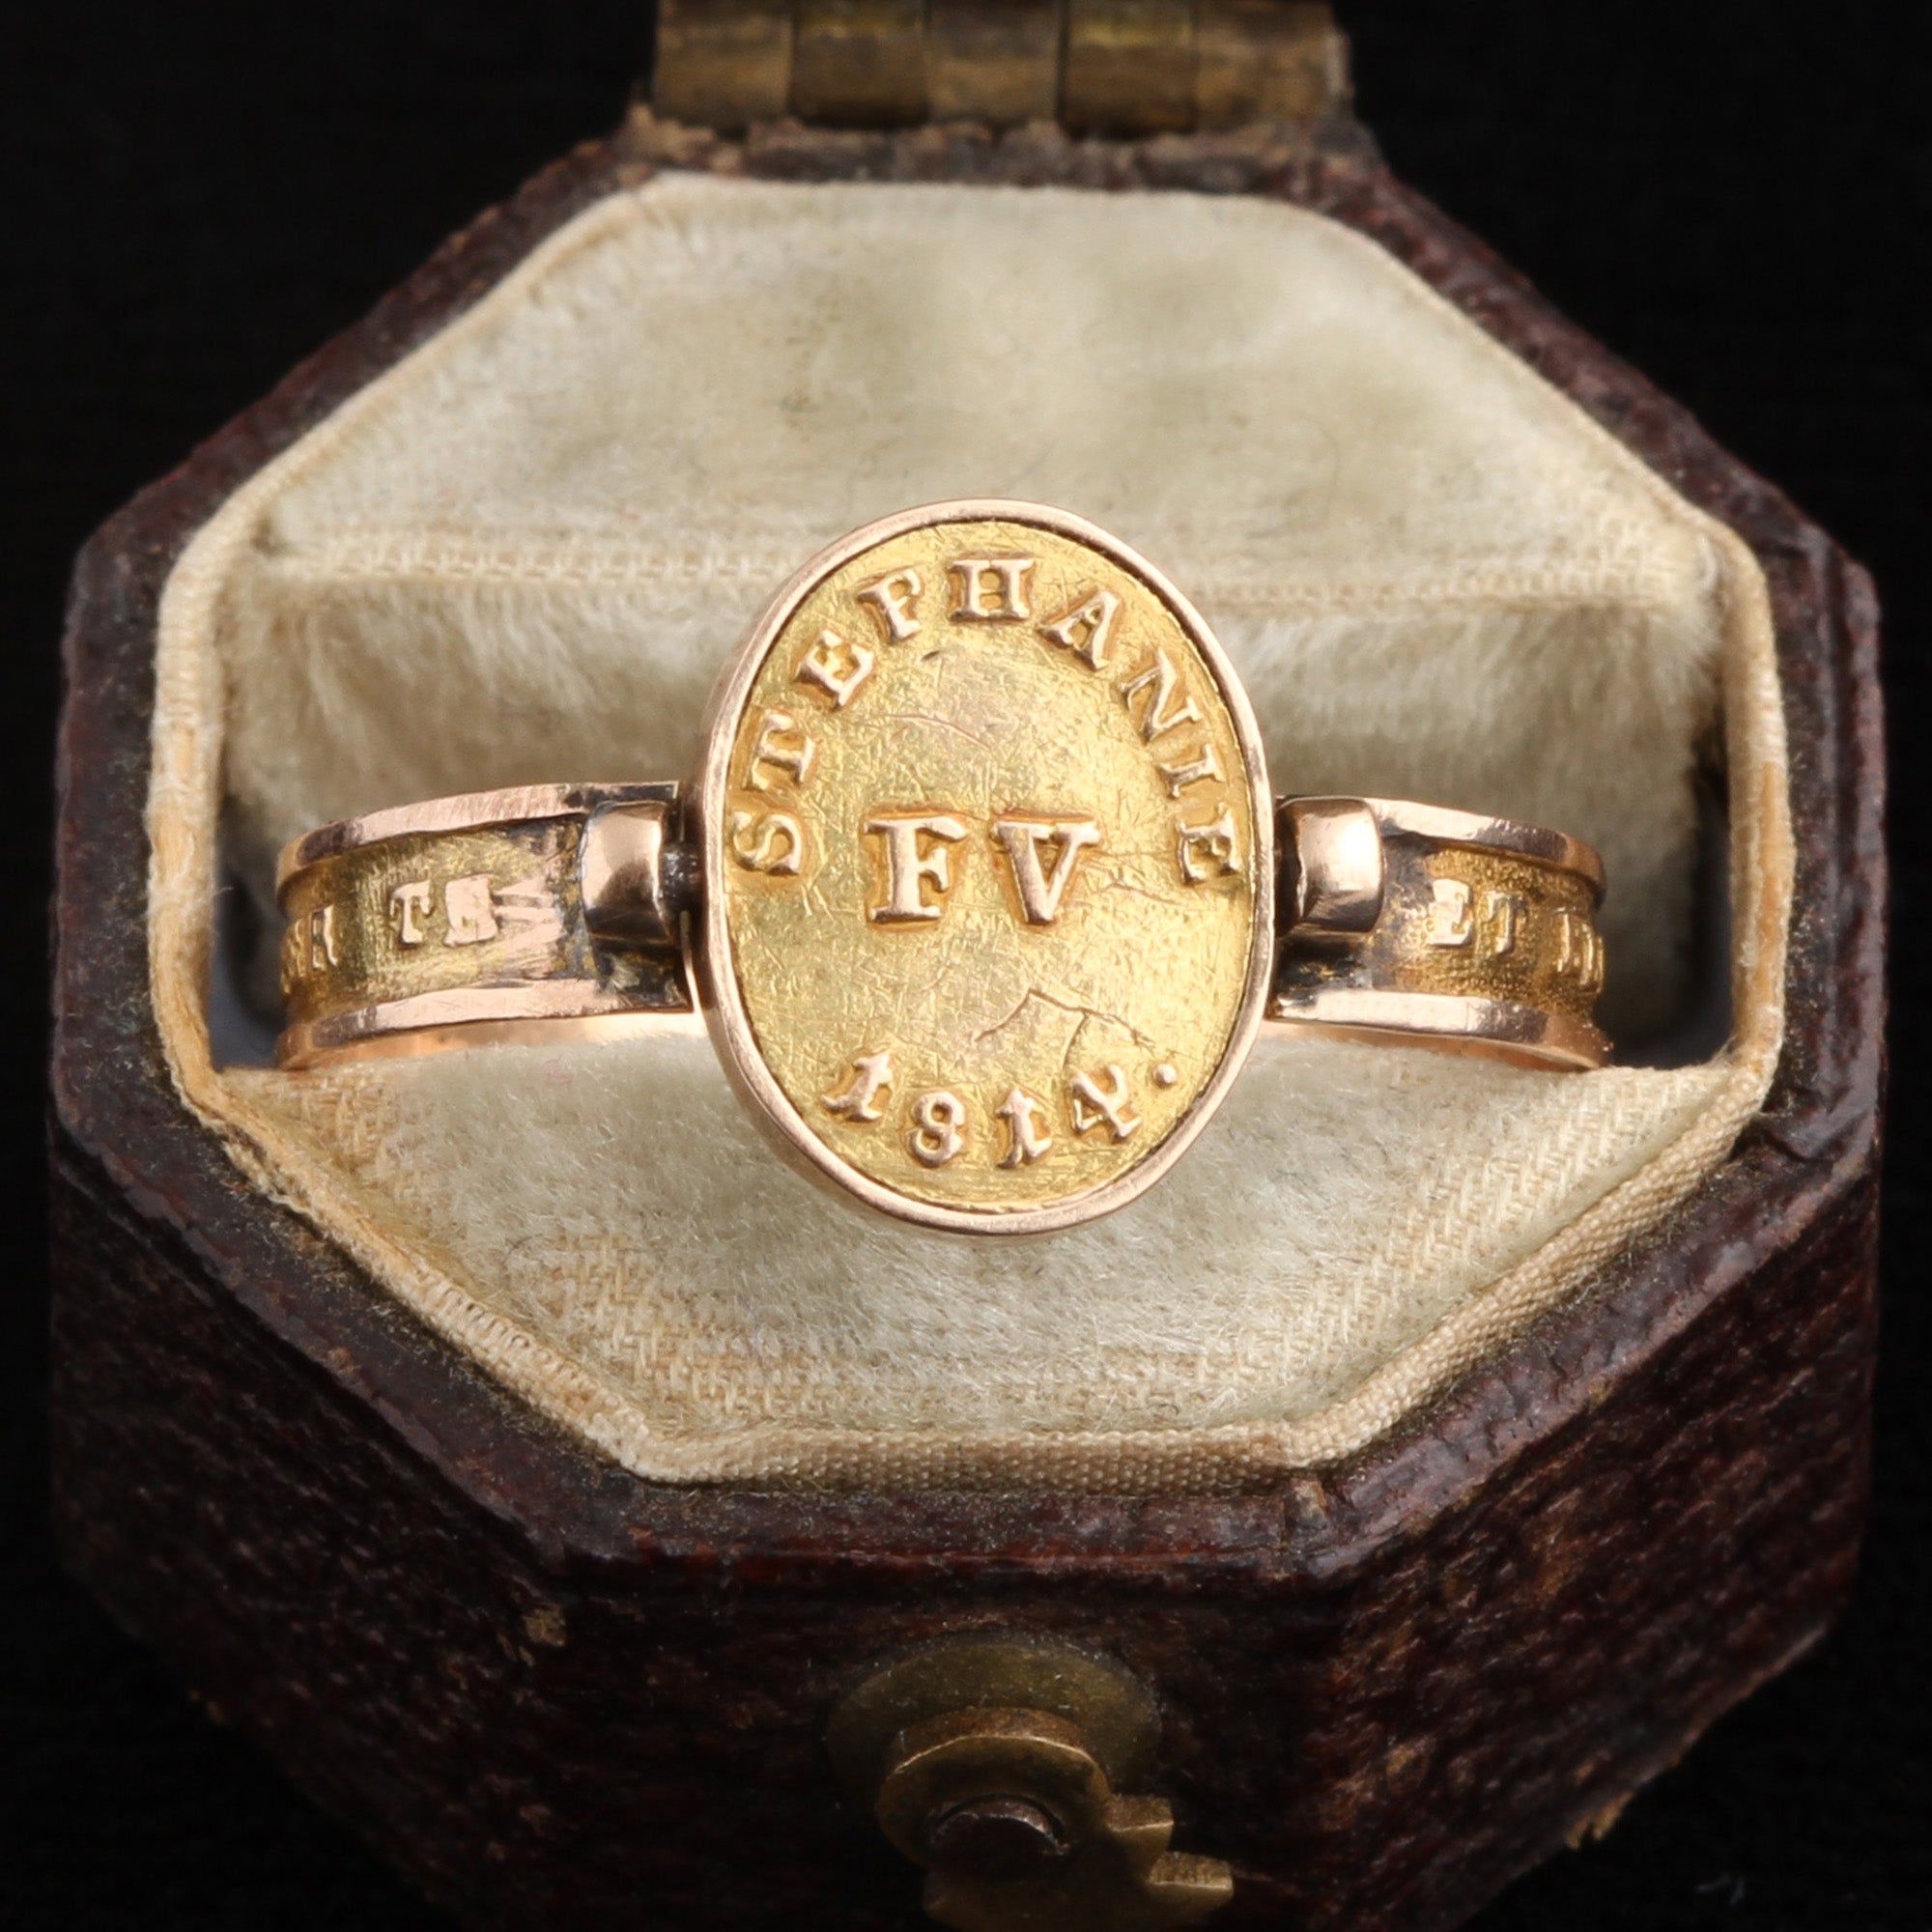 Princess Stephanie 1814 Commemorative Swivel Ring